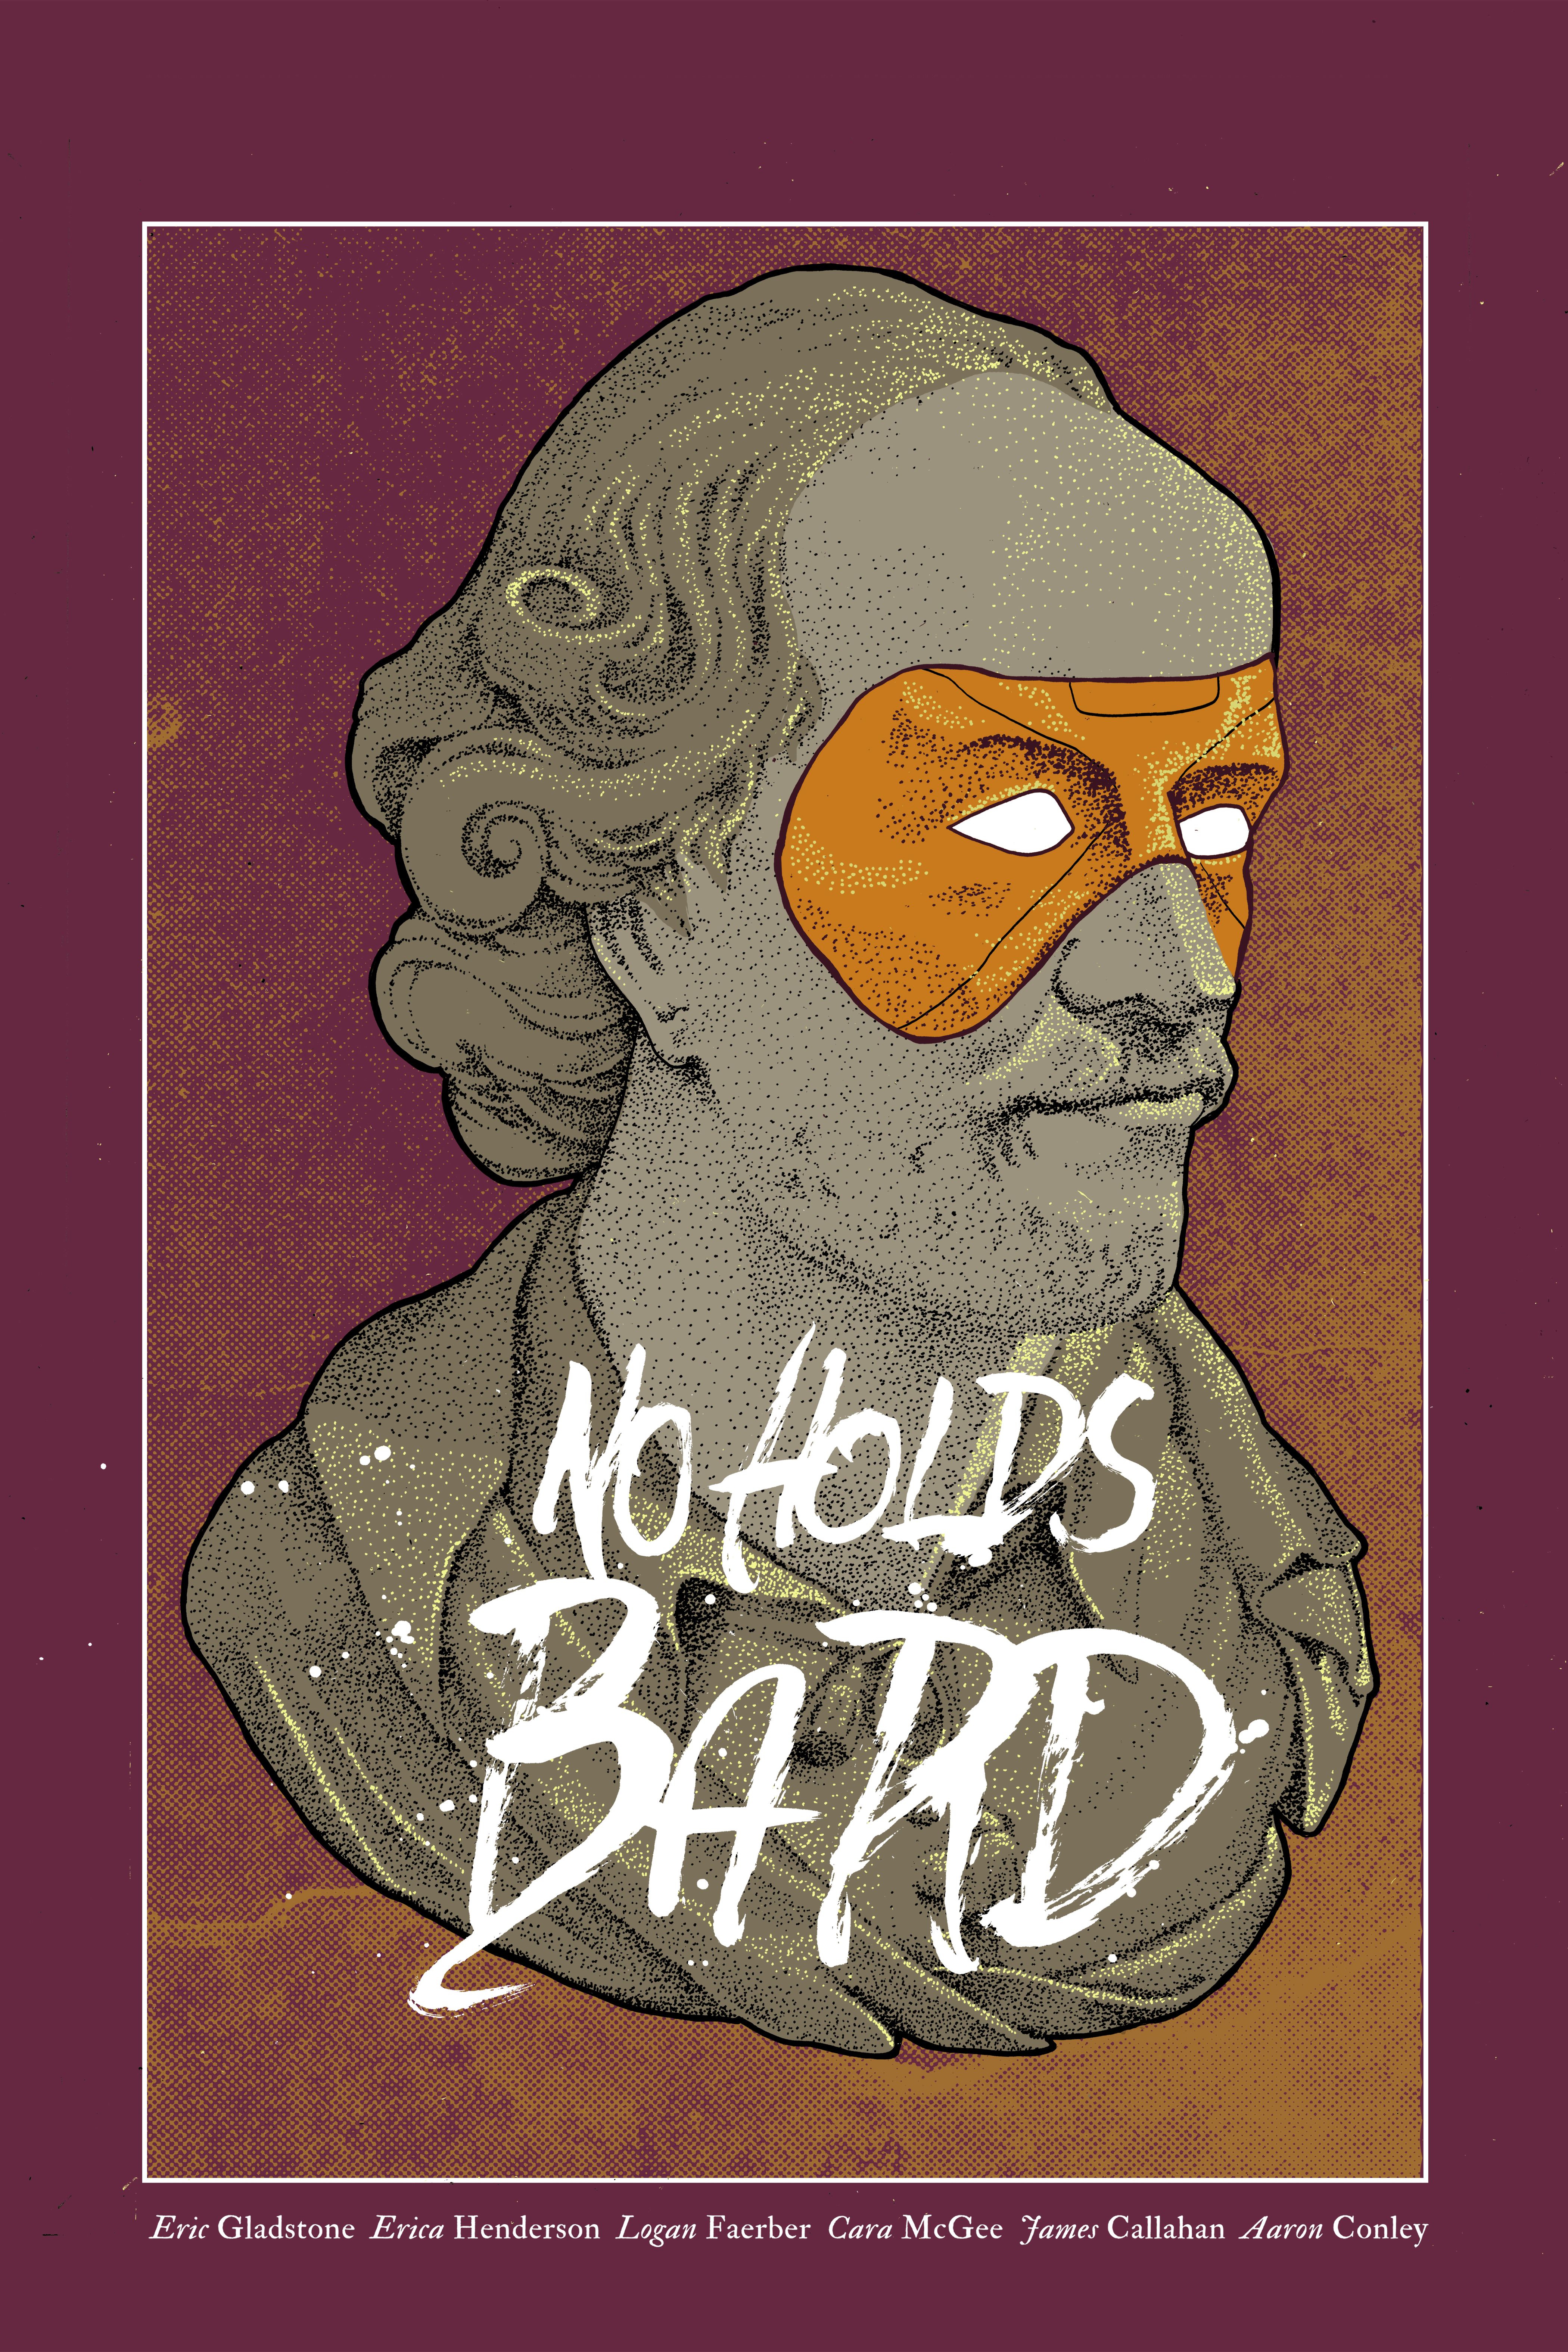 EXCLUSIVE No Holds Bard Tells a Shakespearian Superhero Adventure in Iambic Pentameter